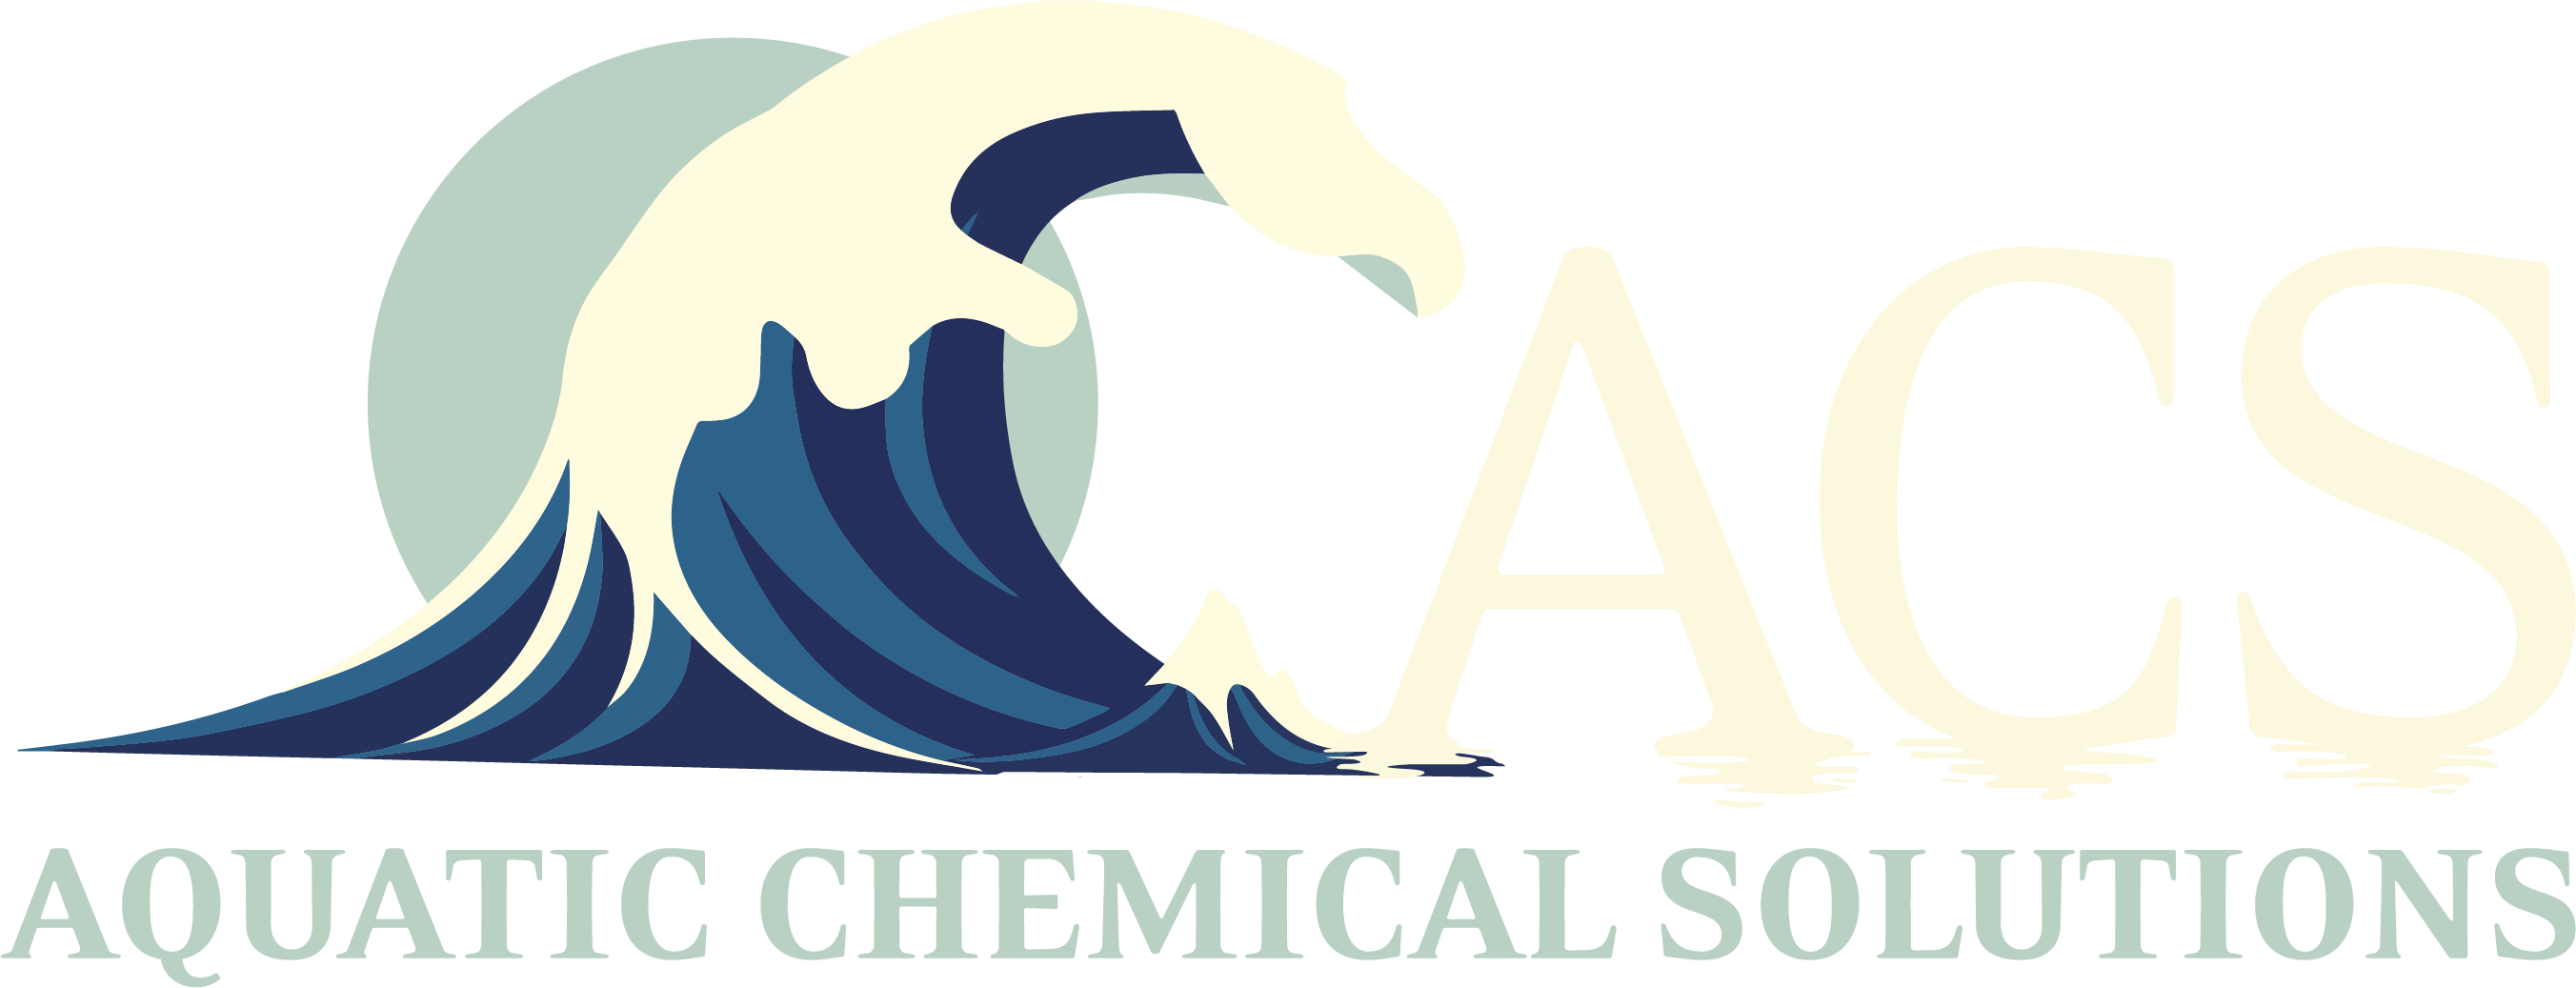 Aquatic Chemical Solutions